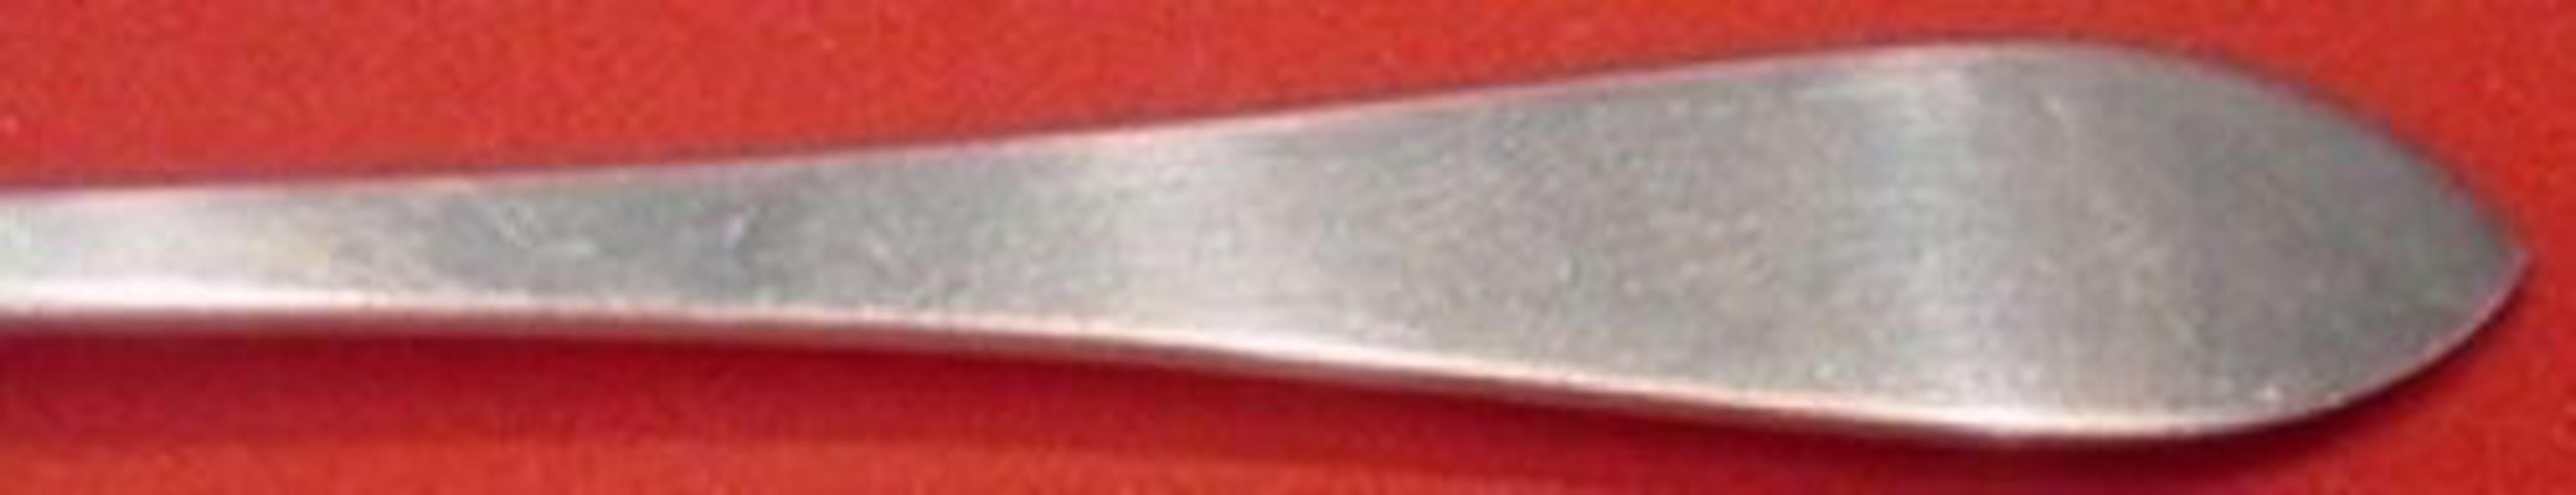 Sterling silver flat handle Butter spreader 5 7/8